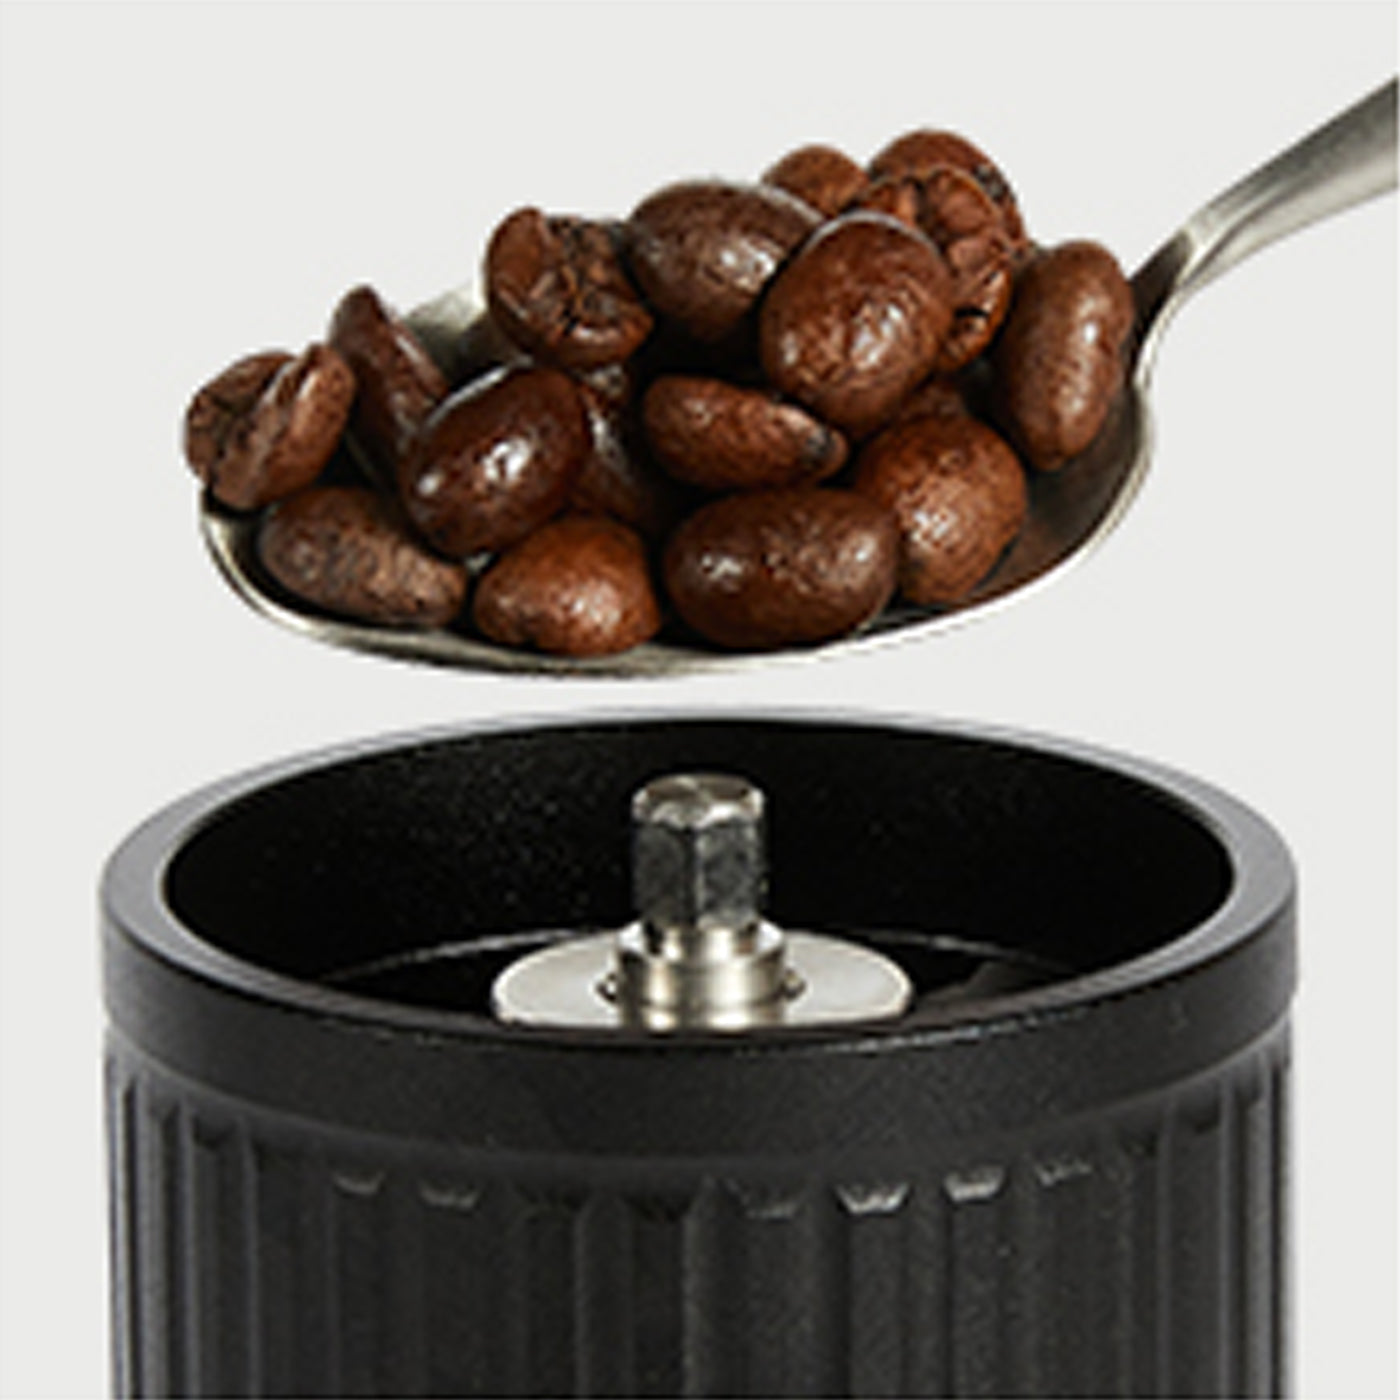 Manual Coffee Grinder by Bald Head Coffee®